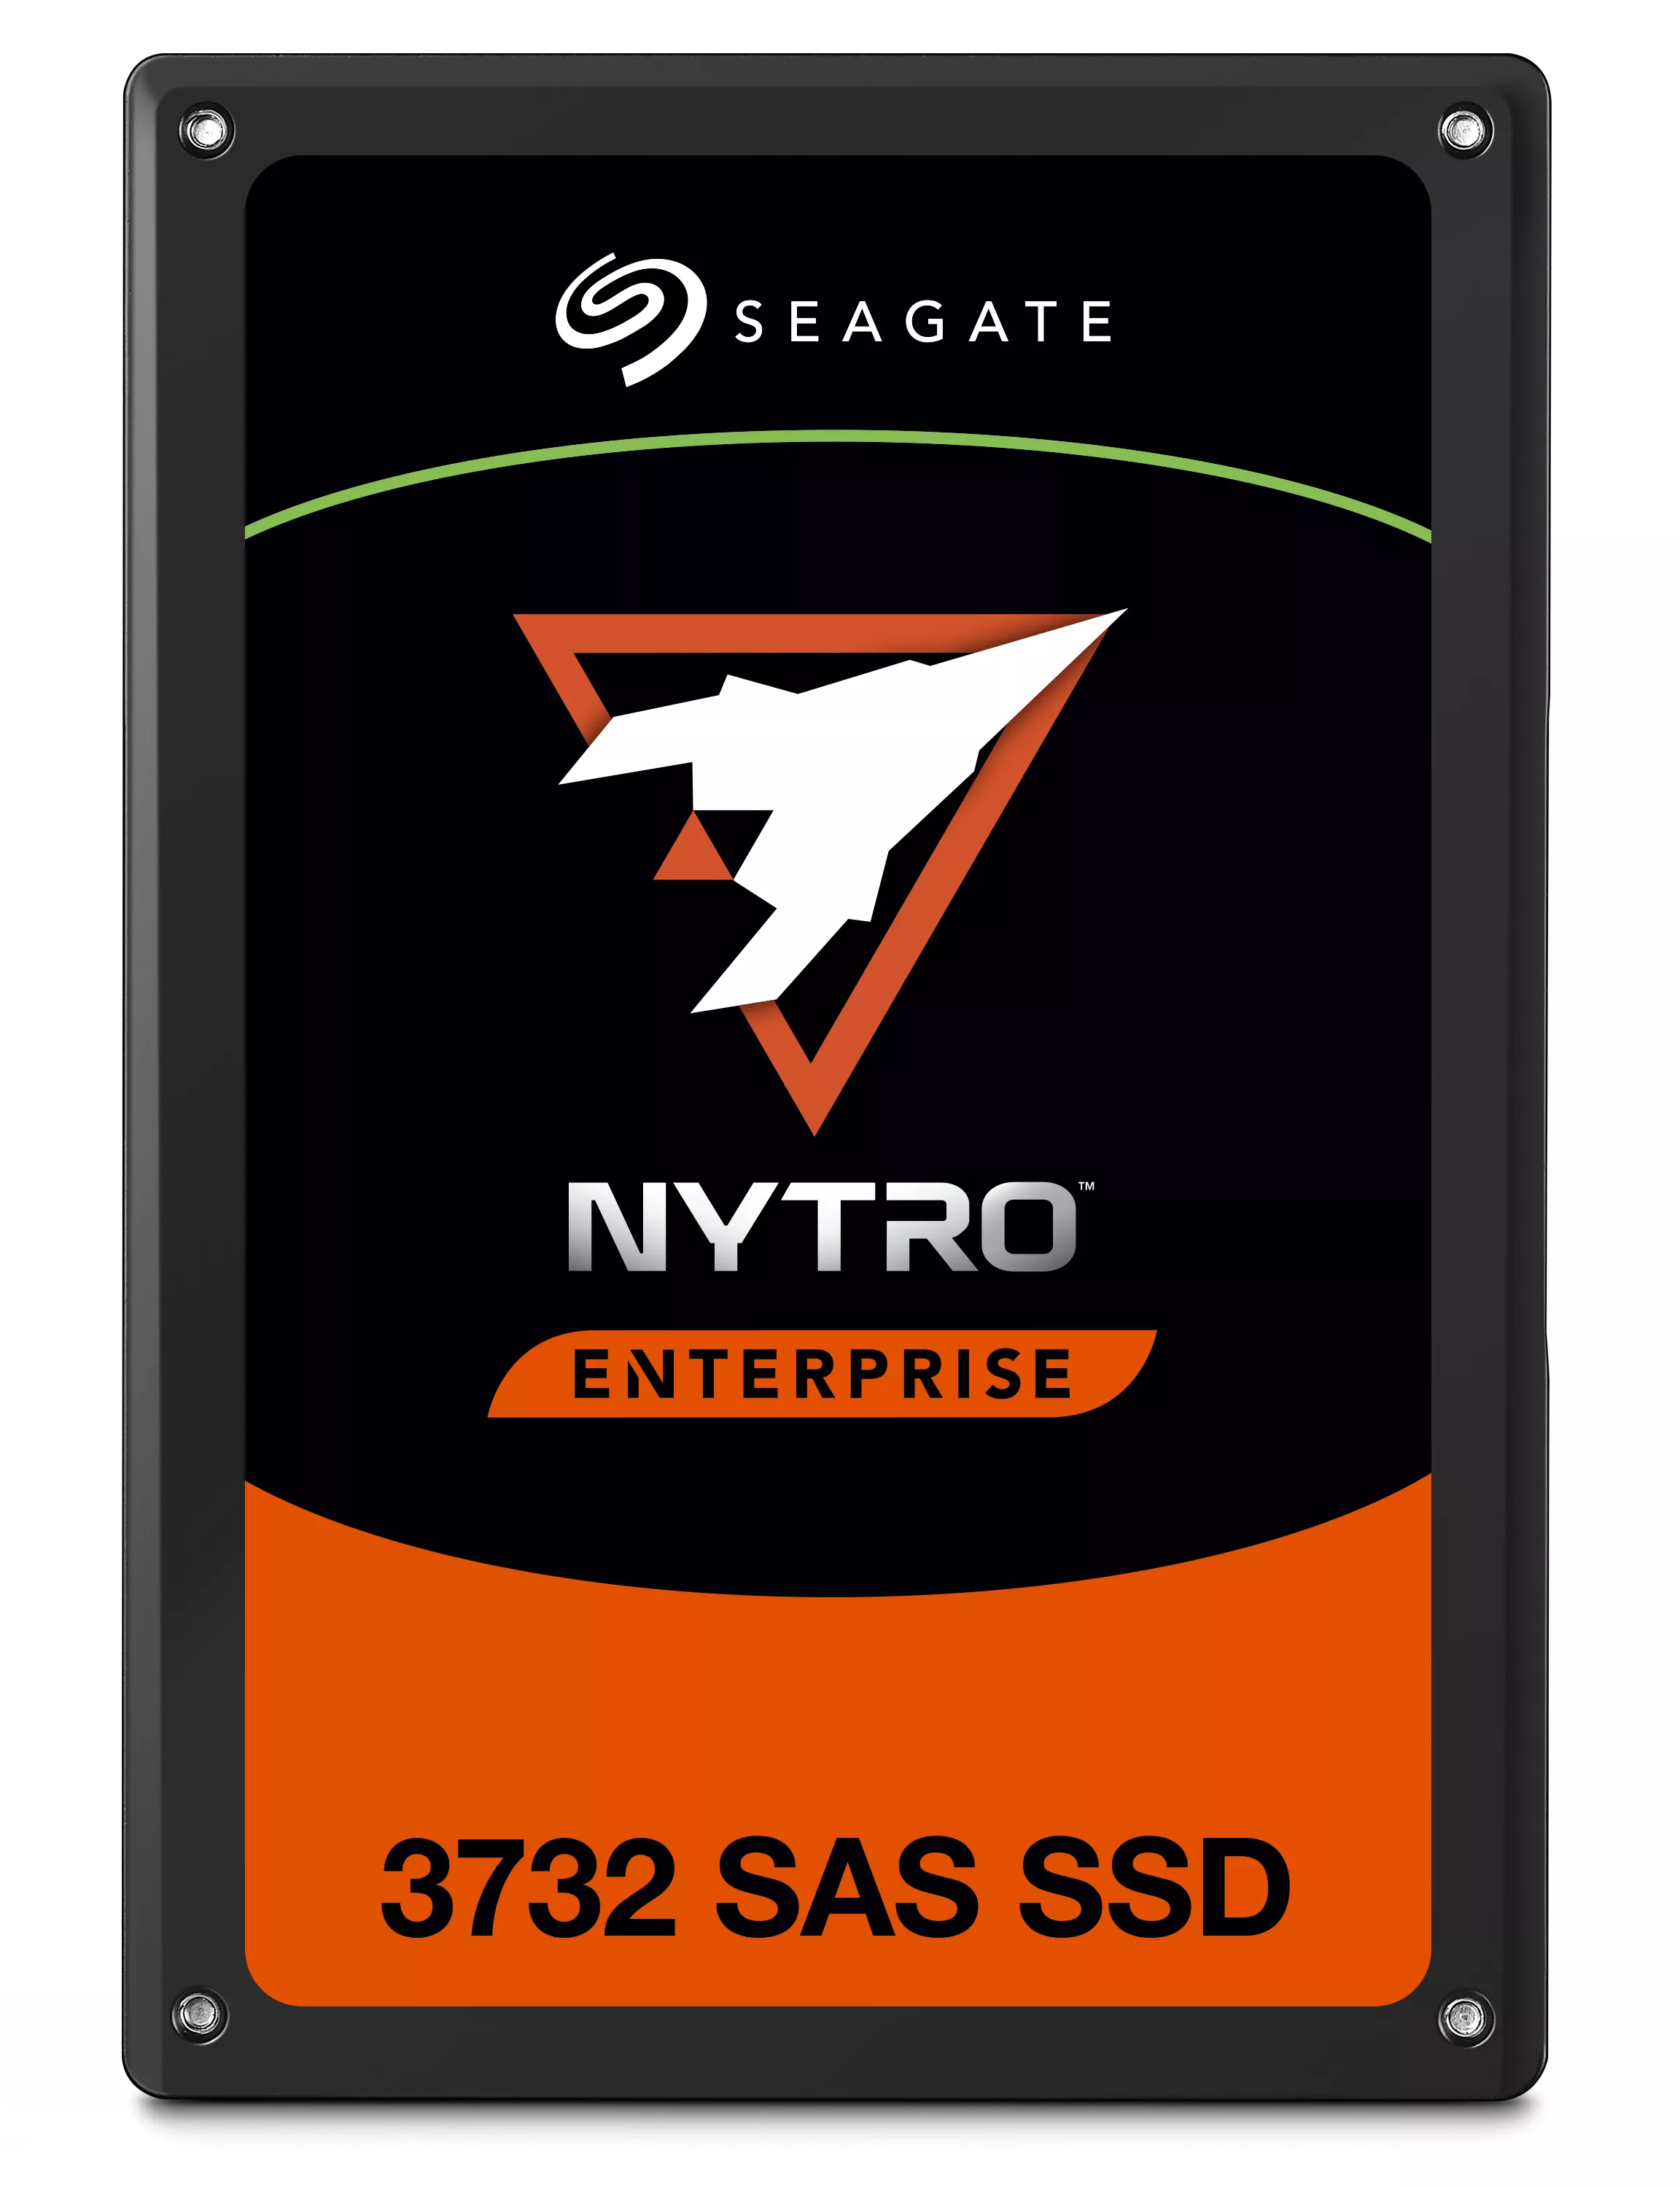 Vente SEAGATE Nytro 3732 SSD 400Go SAS 2.5p Seagate au meilleur prix - visuel 2